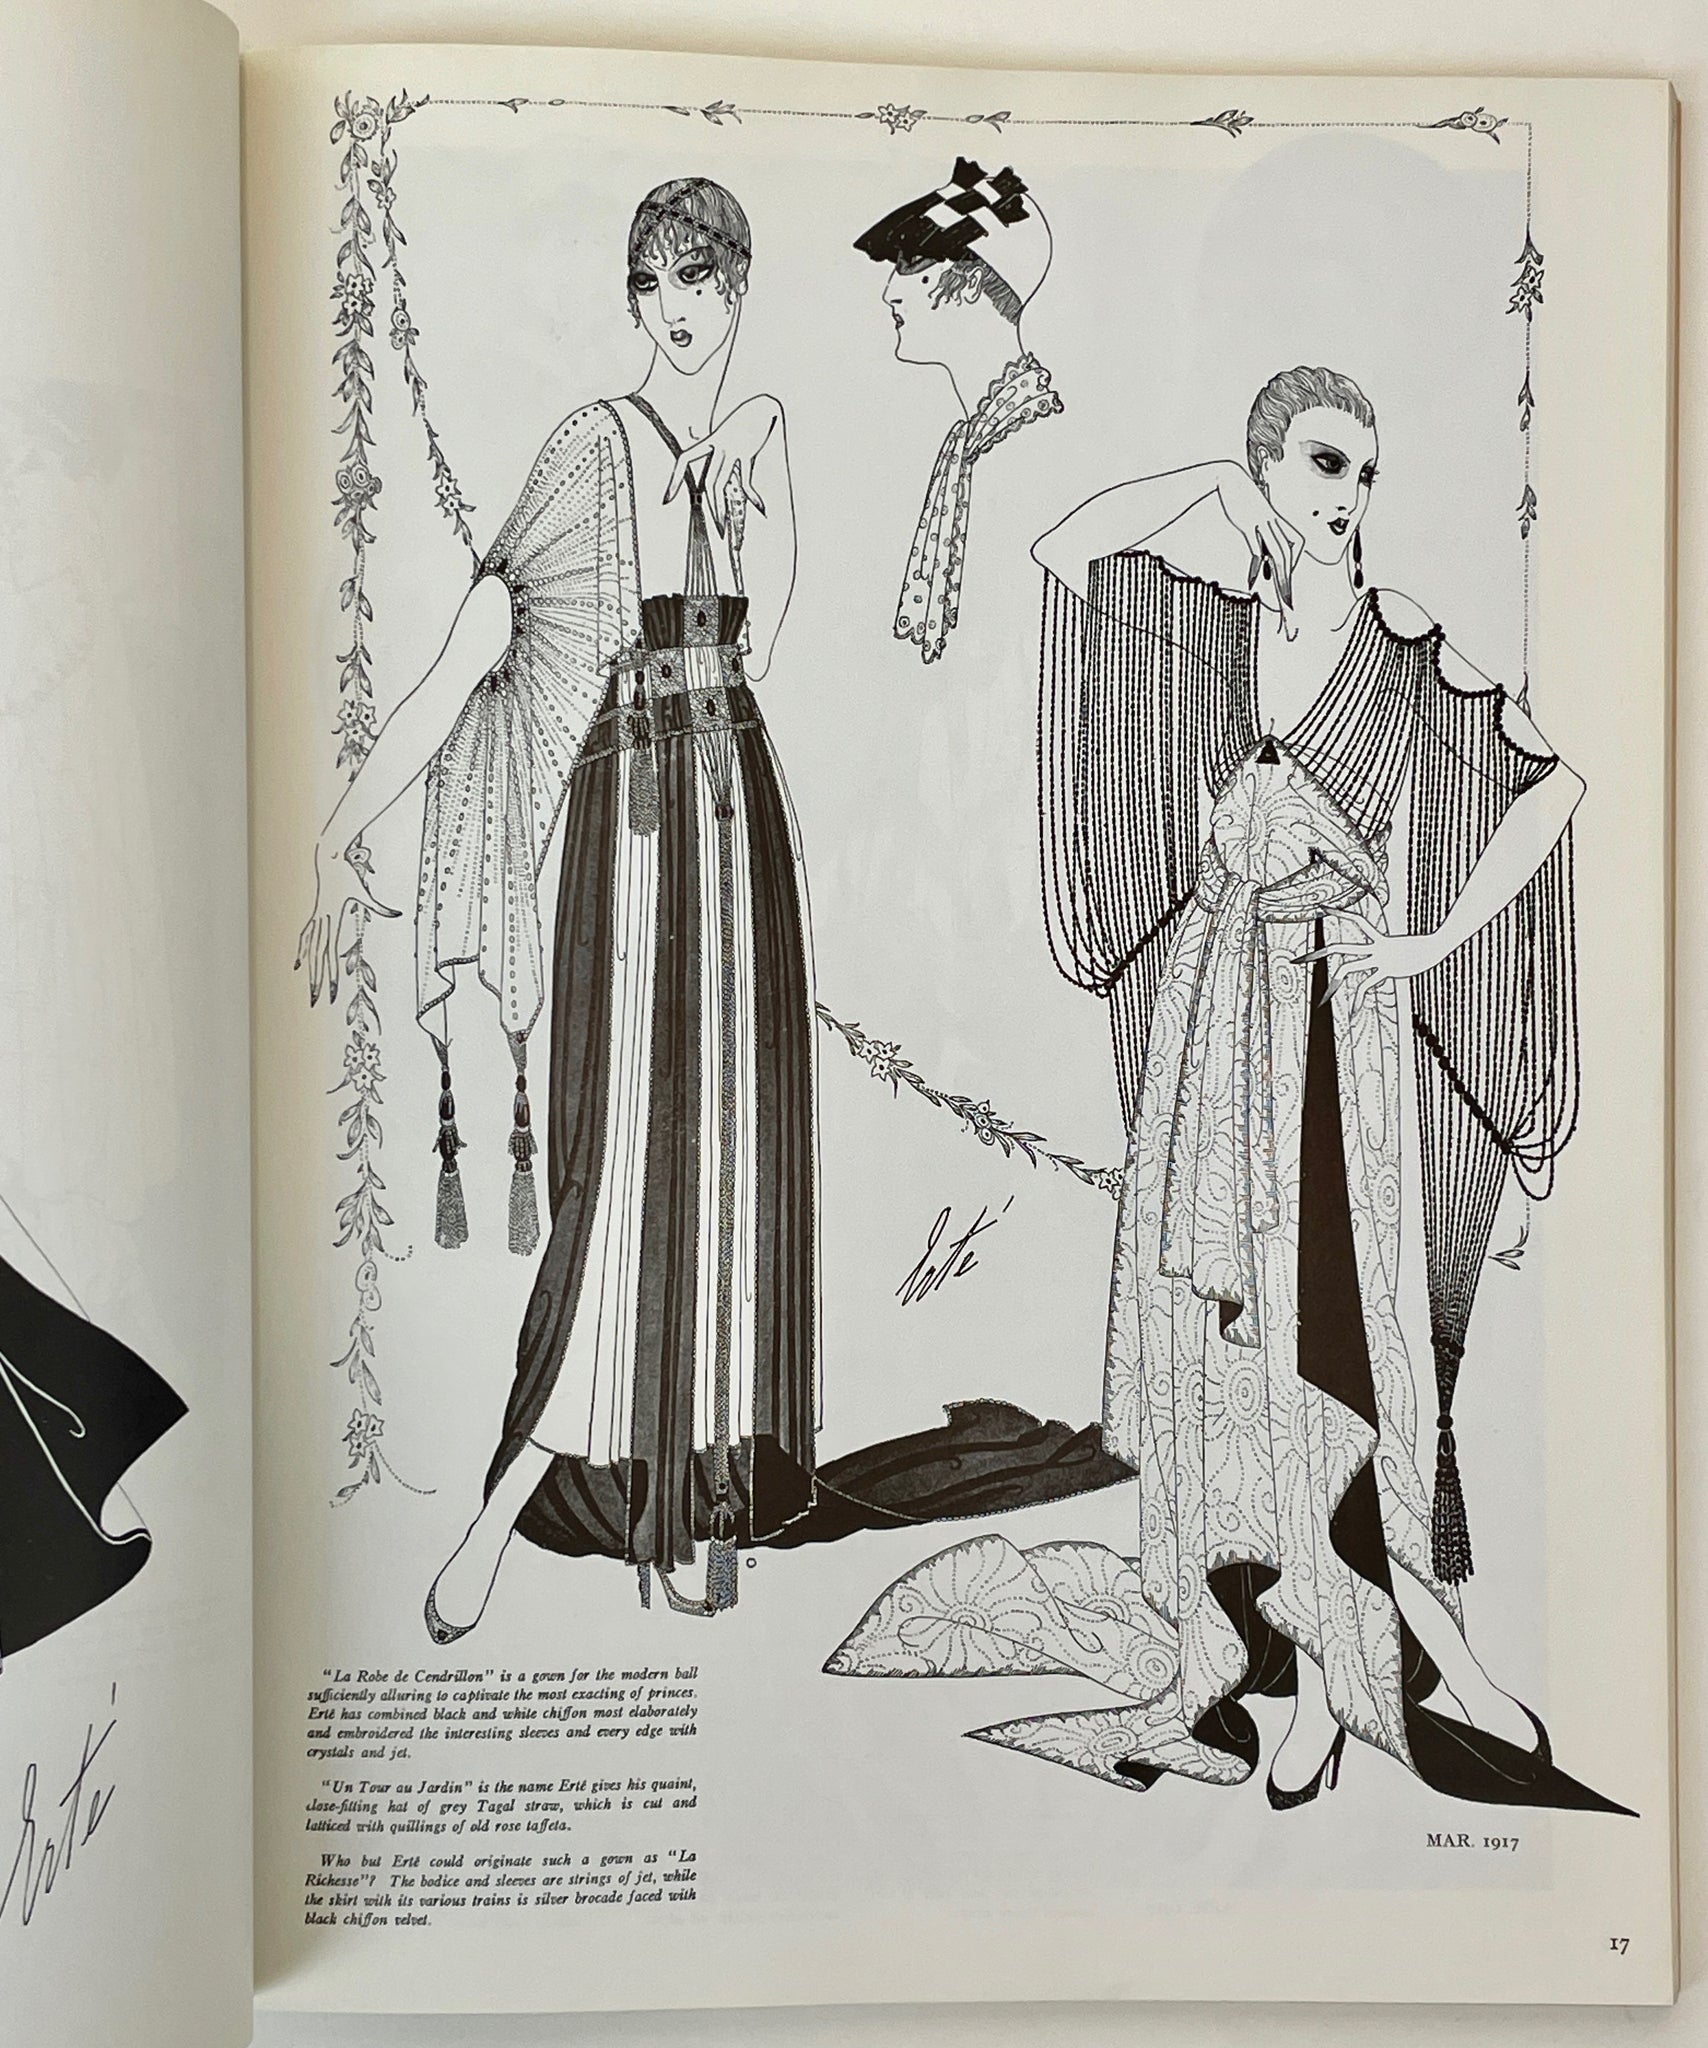 Erté [Romain de Tirtoff] (1892-1990) Designs by Erté. bFashion Drawings & Illustrations from 'Harper's Bazar' – SIGNED